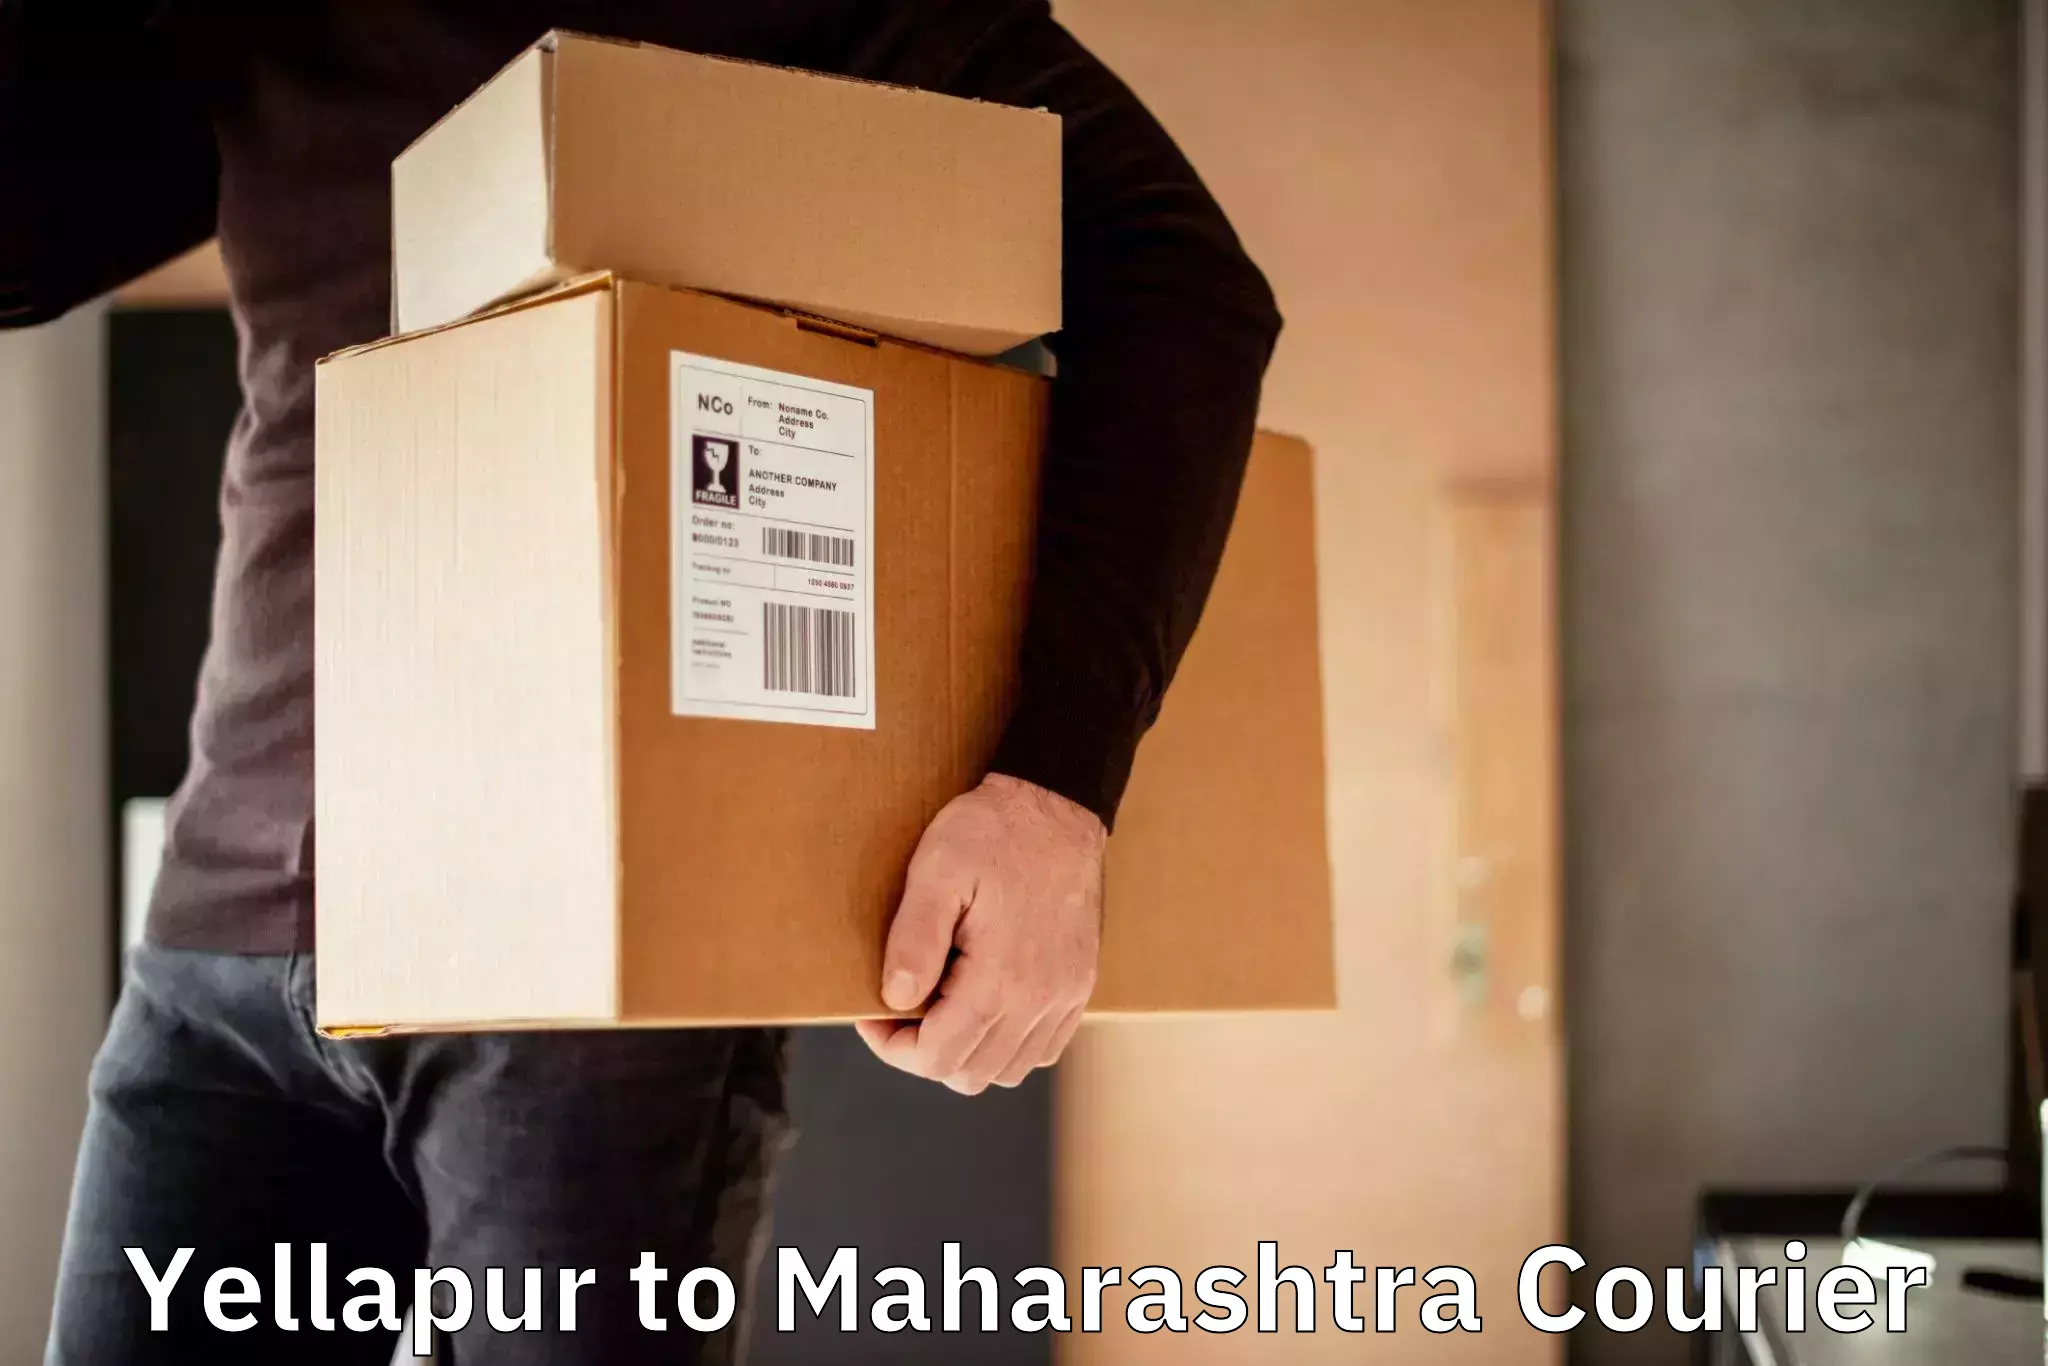 High-speed parcel service Yellapur to Maharashtra